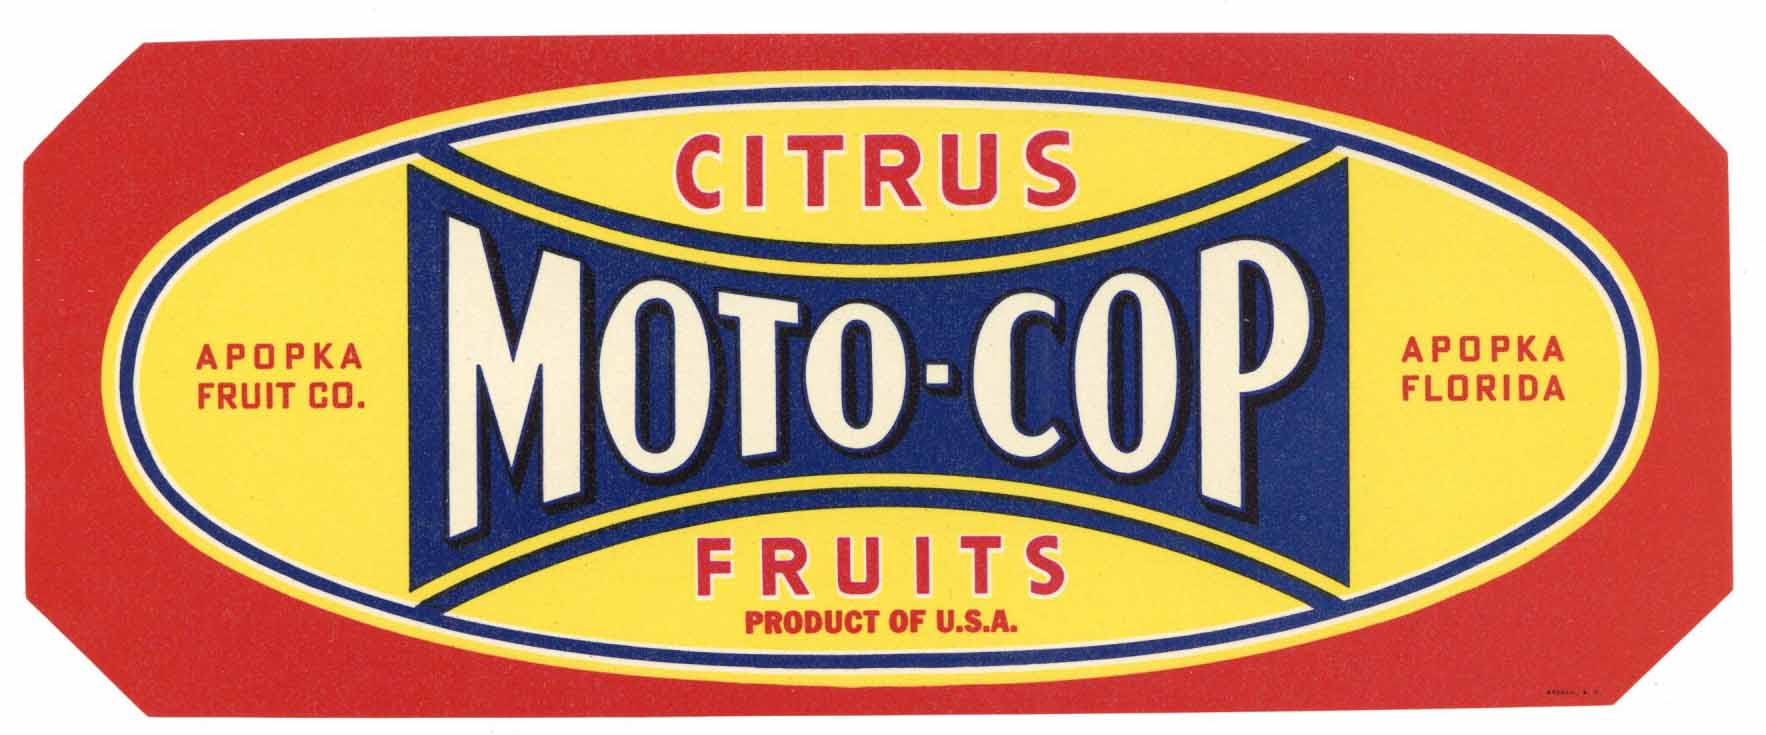 Moto-Cop Brand Vintage Apopka Florida Citrus Crate Label